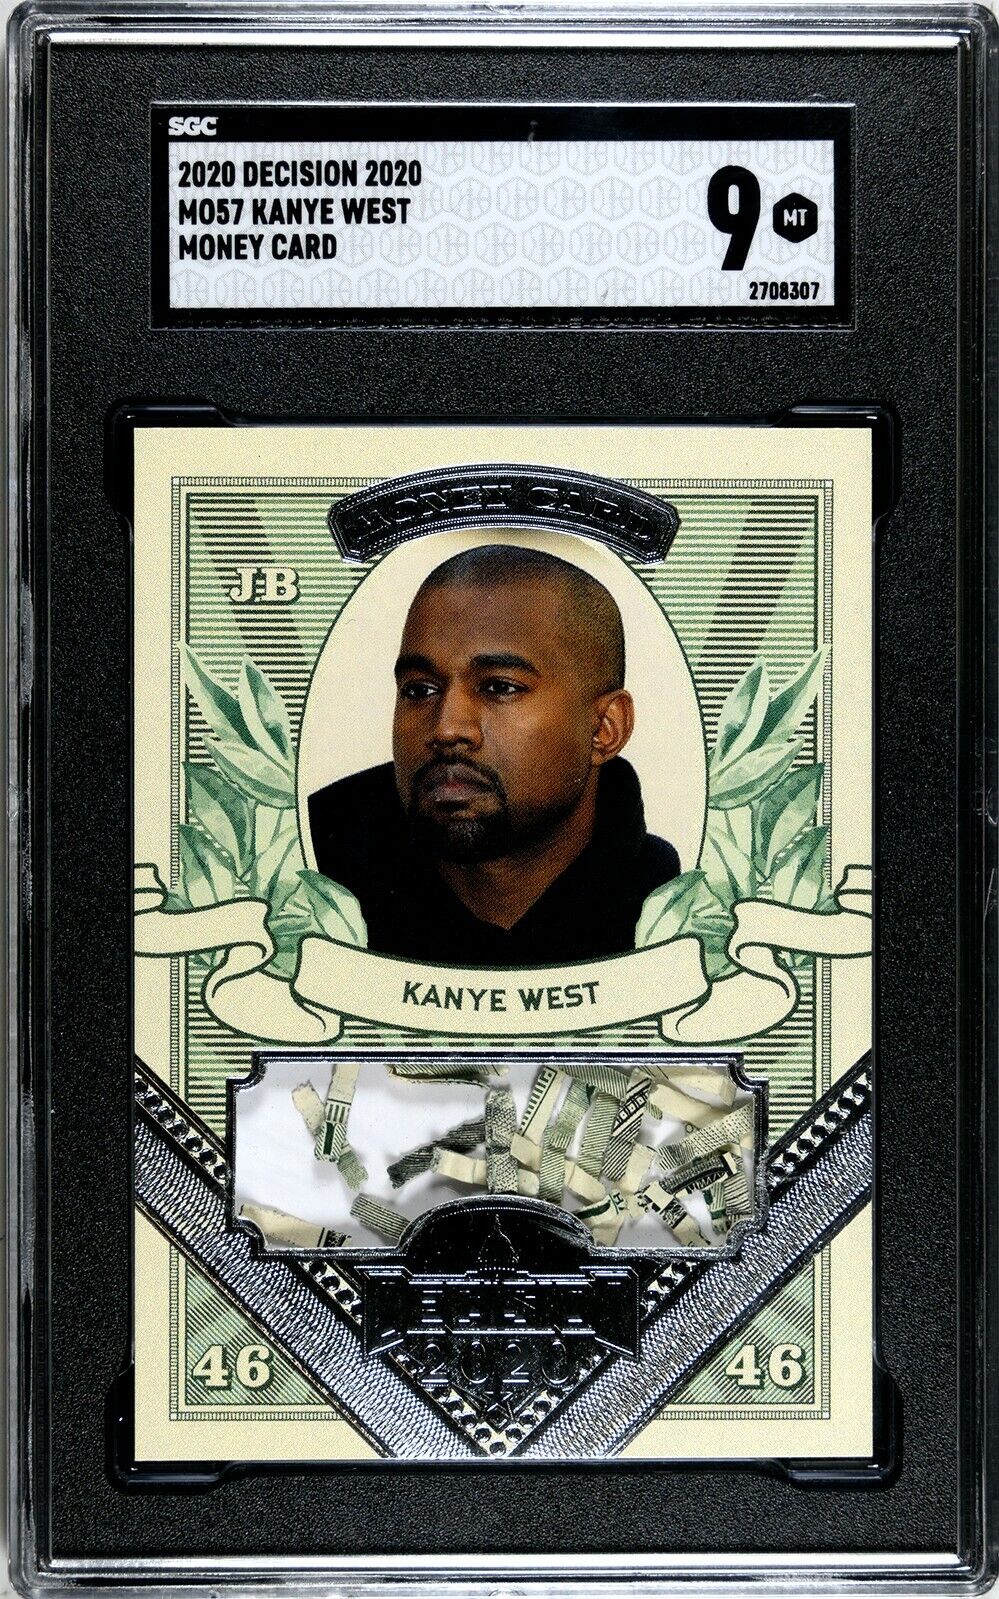 RARE Decision 2020 Kanye West MONEY CARD #MO57 SGC 9 MINT (Pop 1)